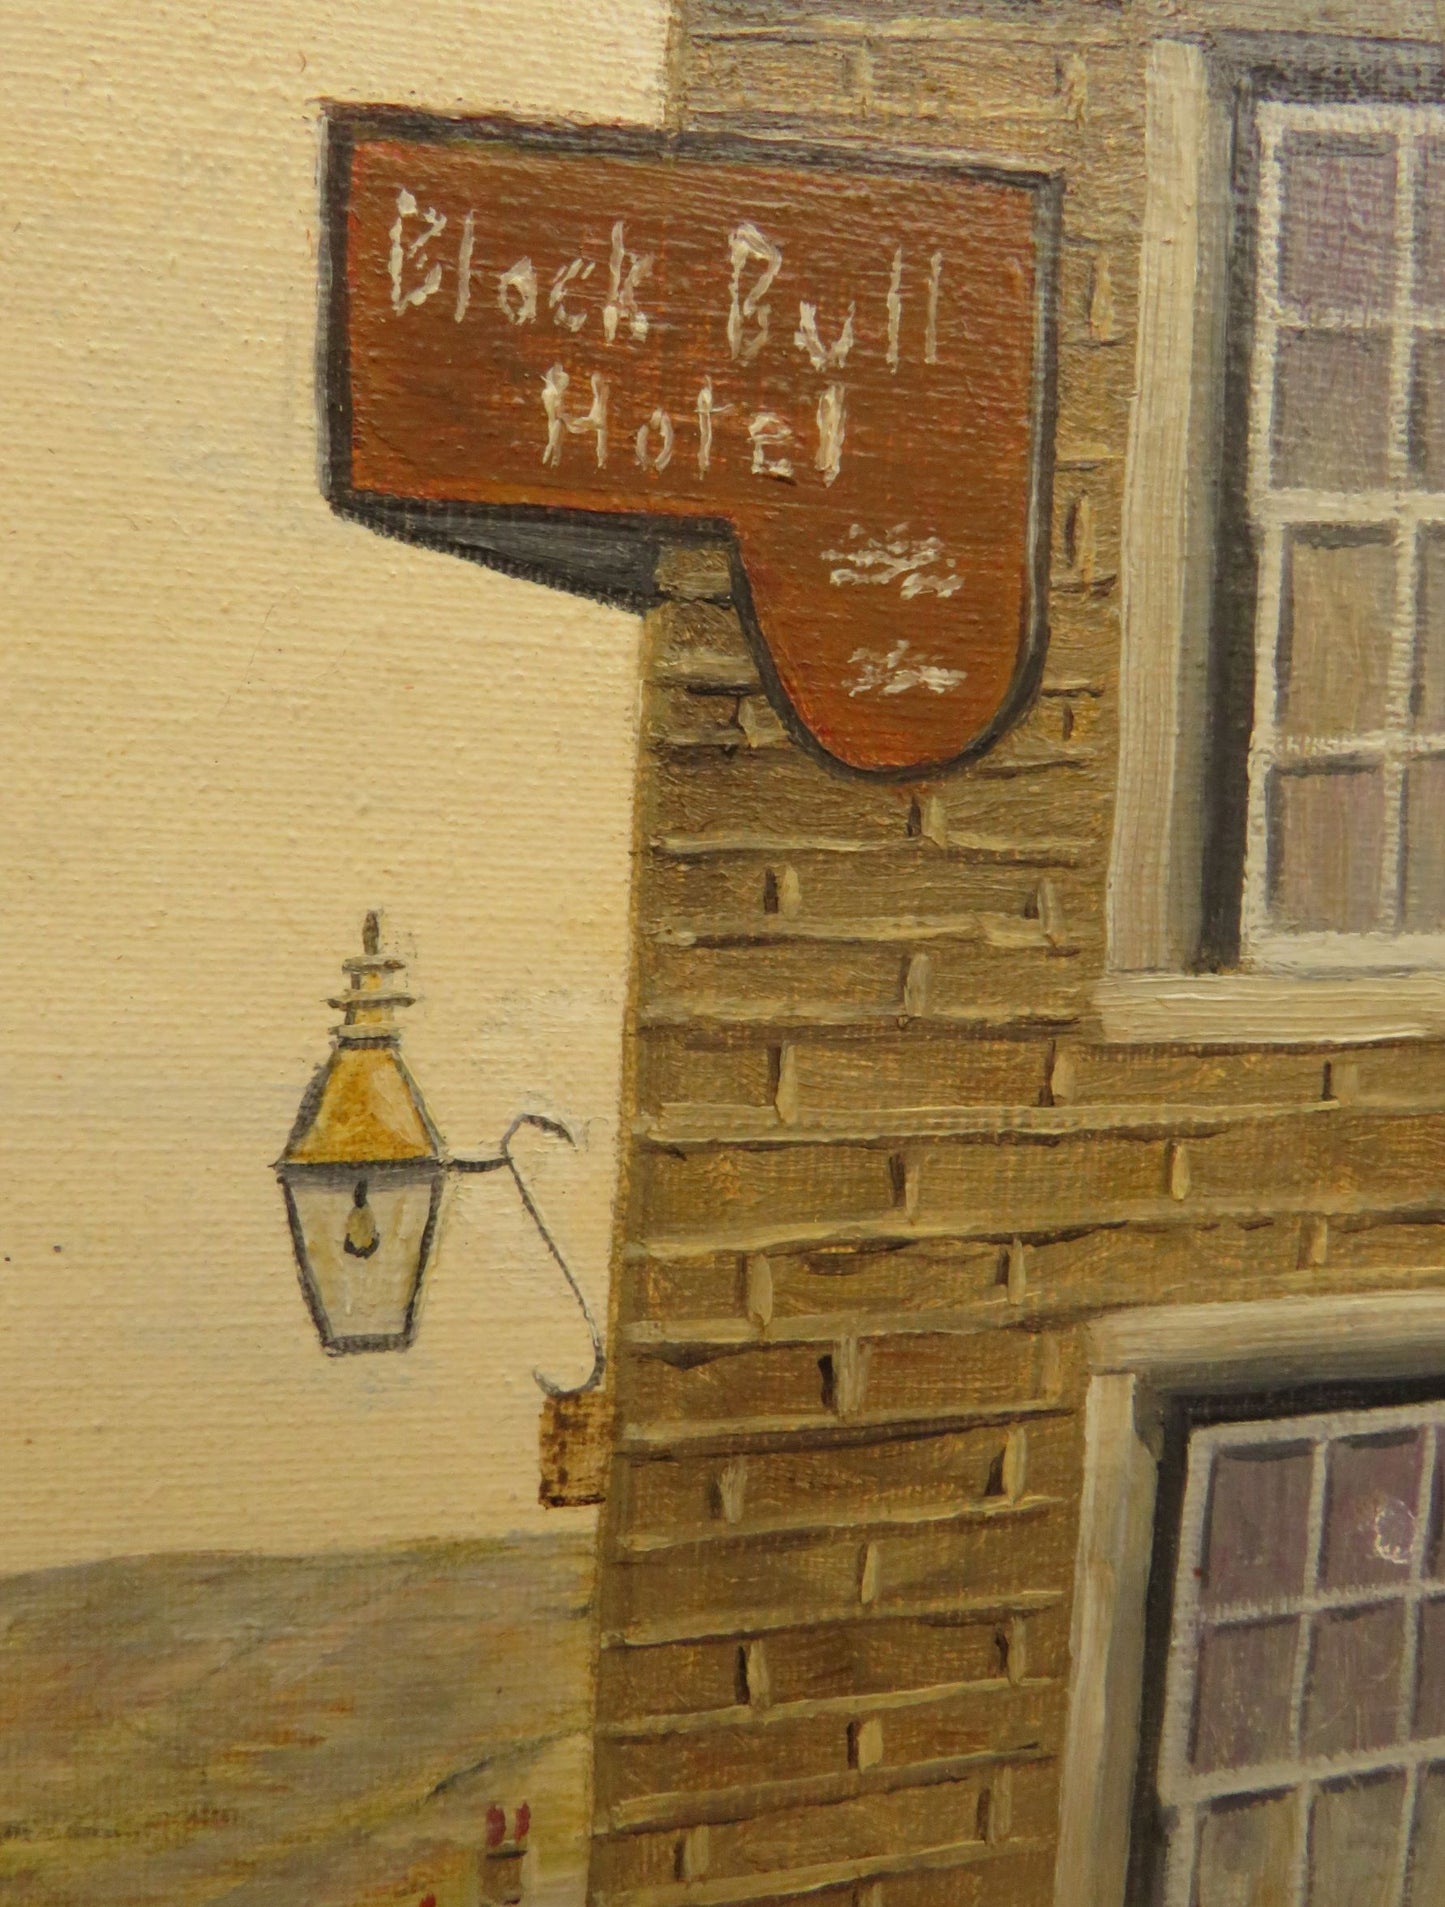 Framed oil painting of The Black Bull Hotel in Haworth by David Ellis, 1976